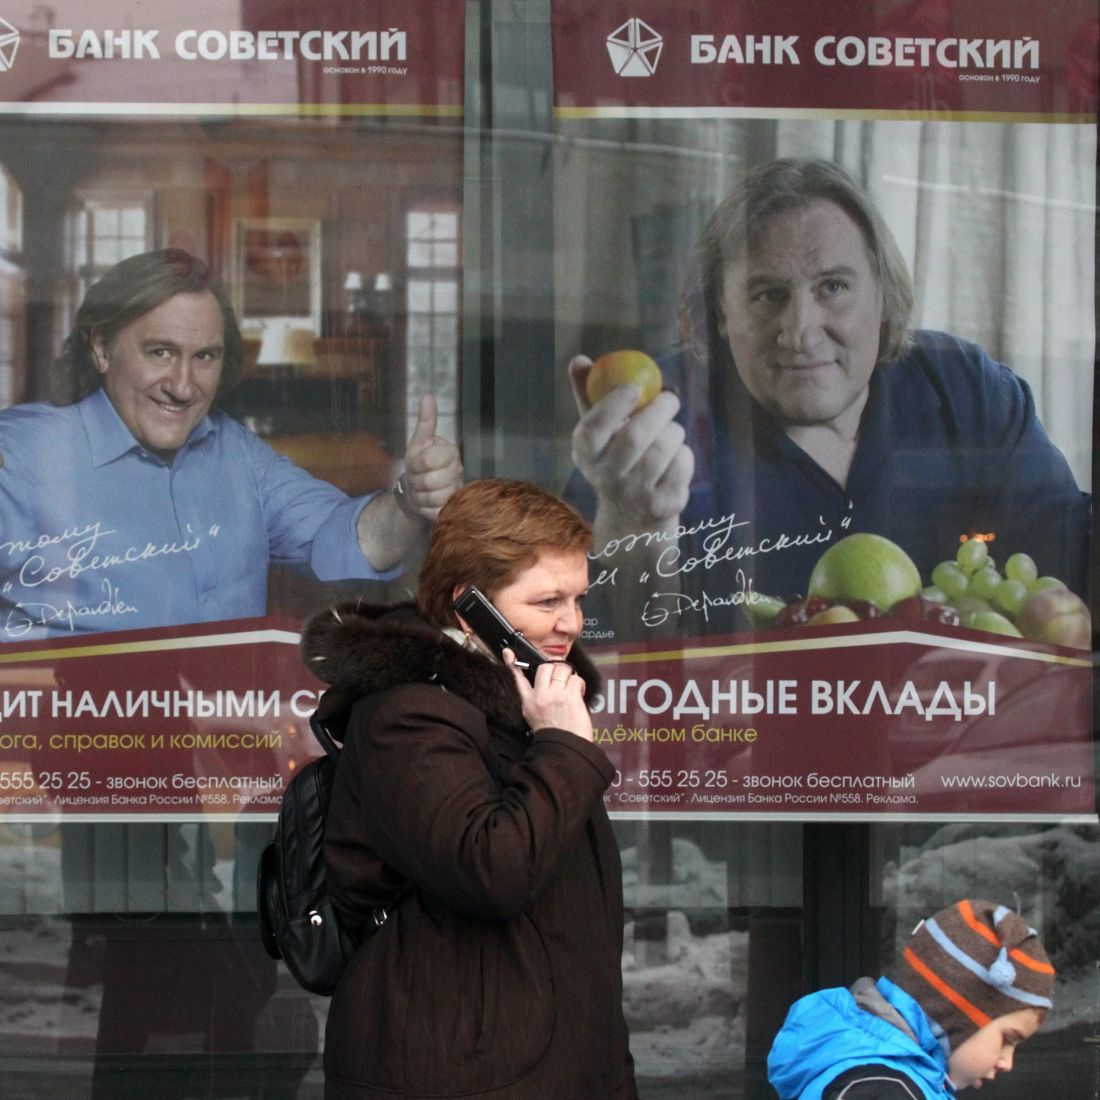 Френският актьор Жерар Депардийо рекламира руска банка